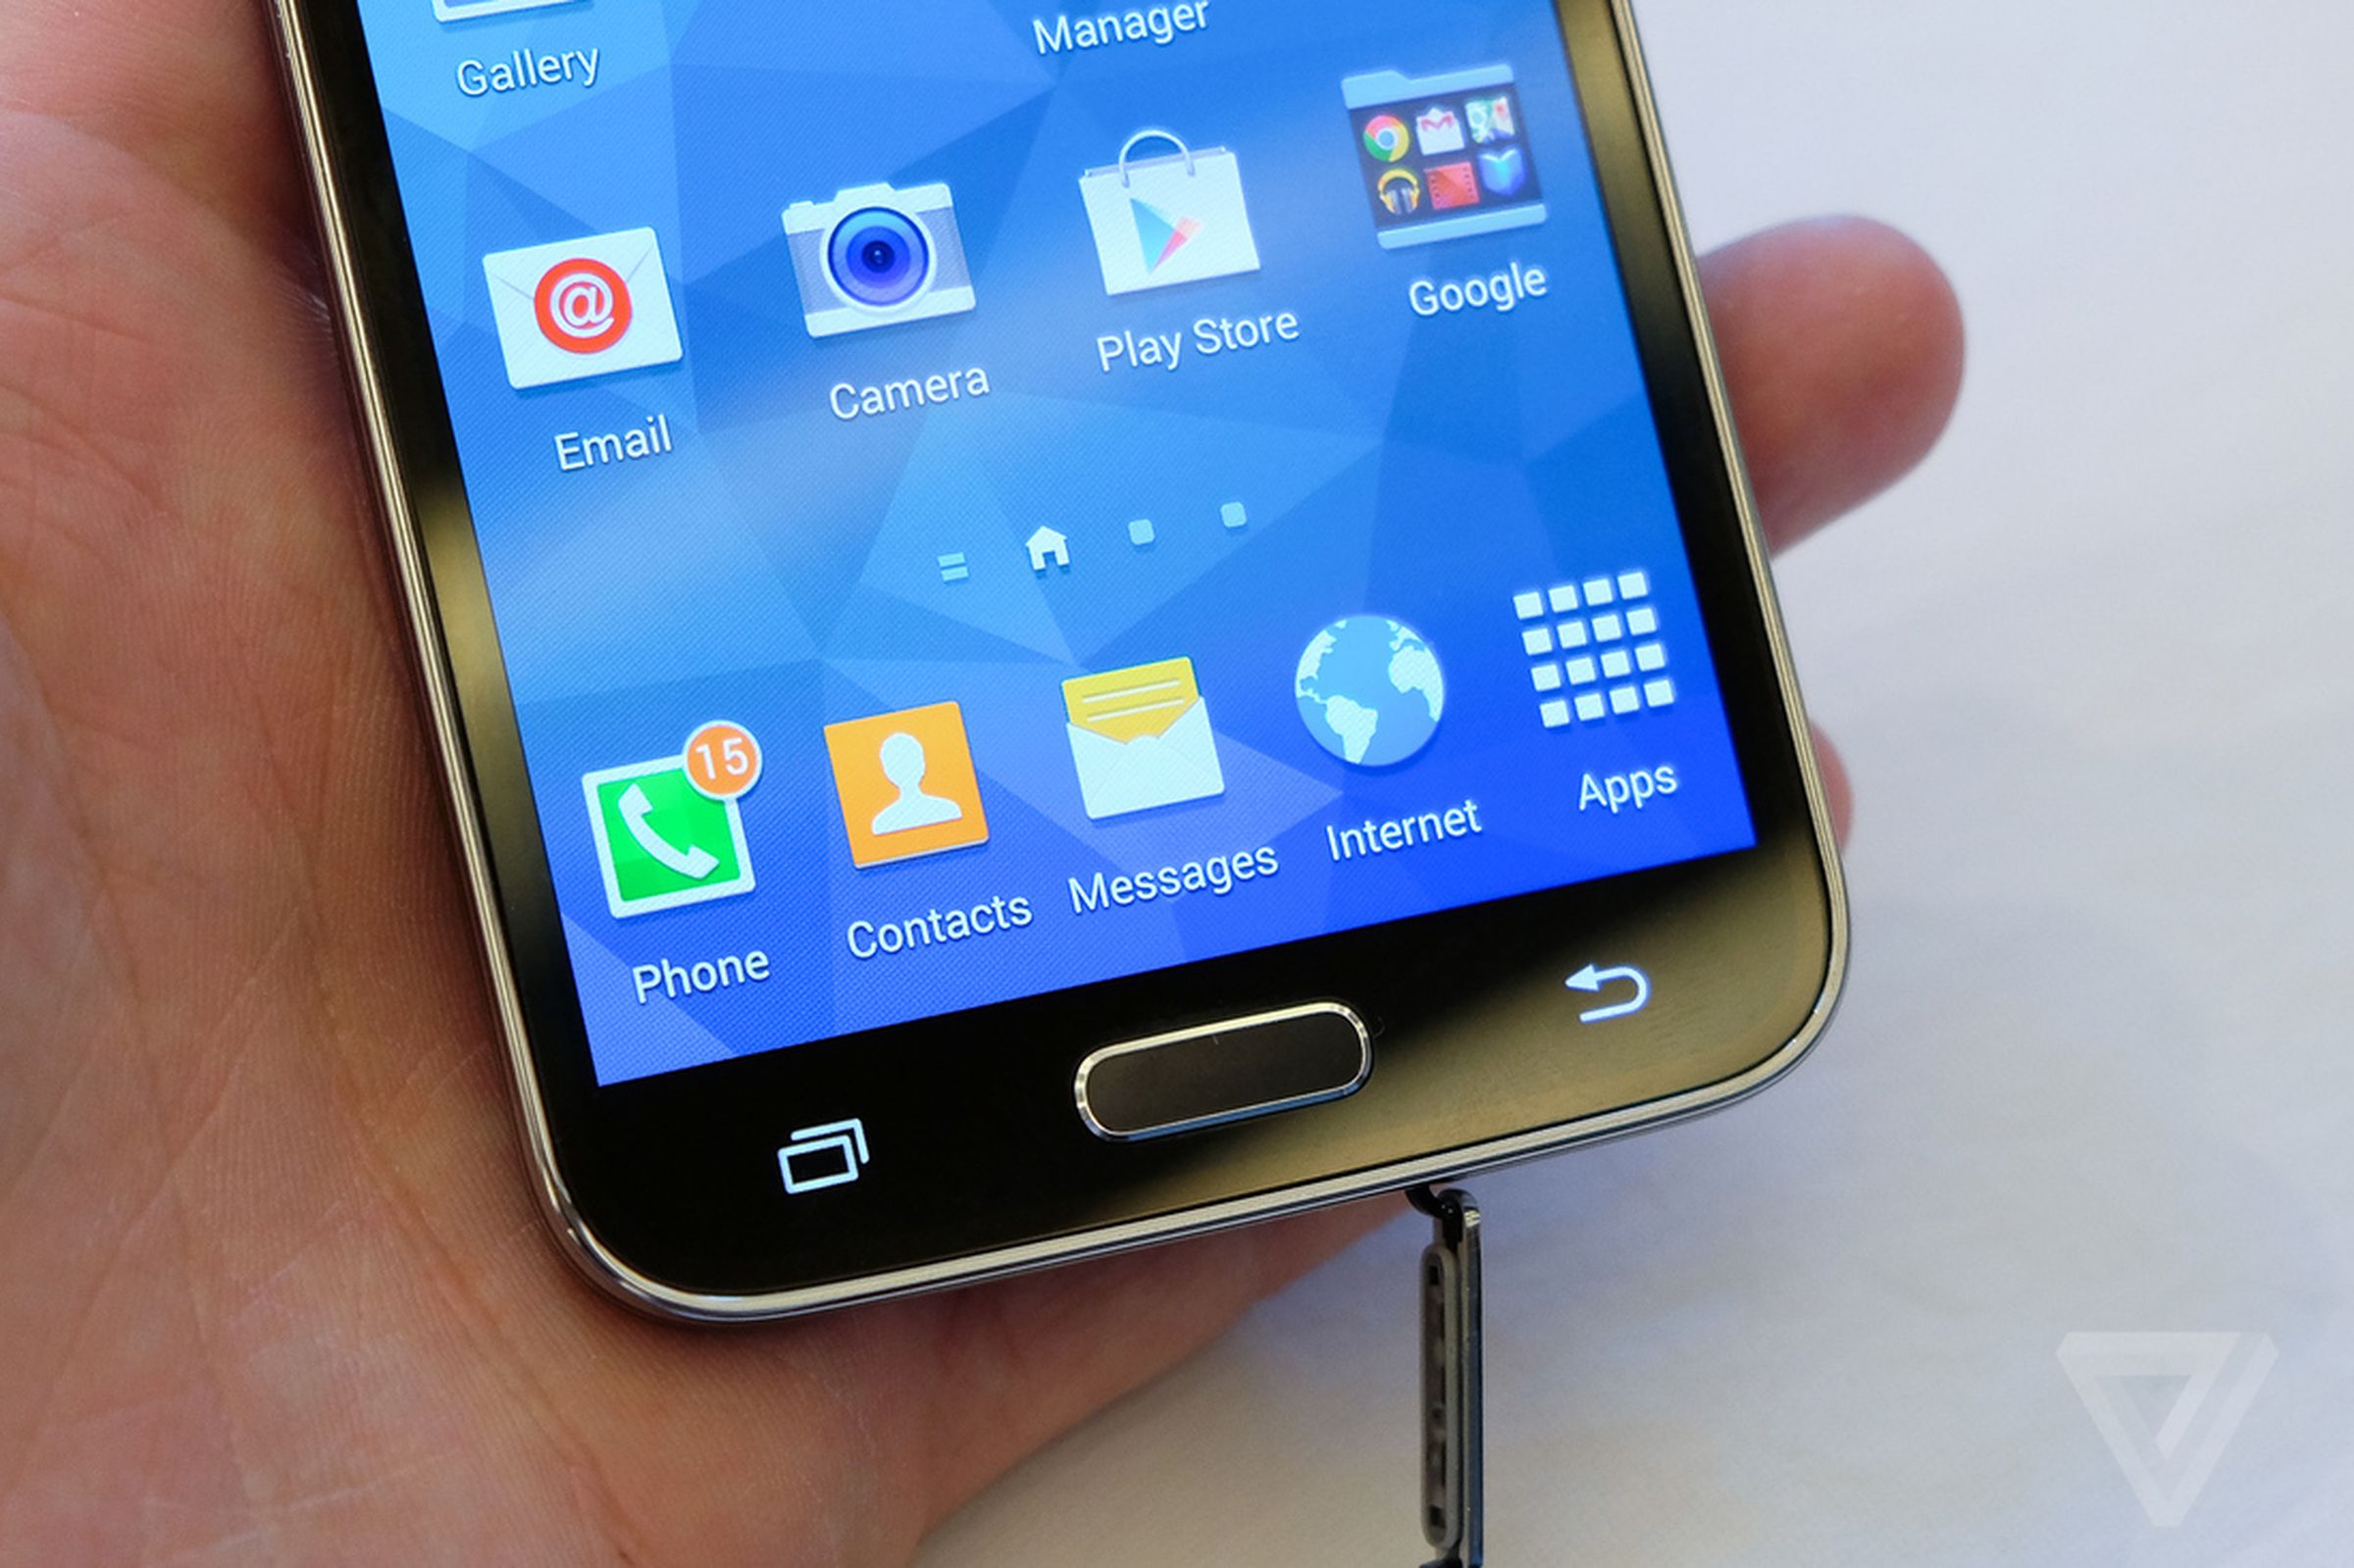 Samsung Galaxy S5 hands-on photos